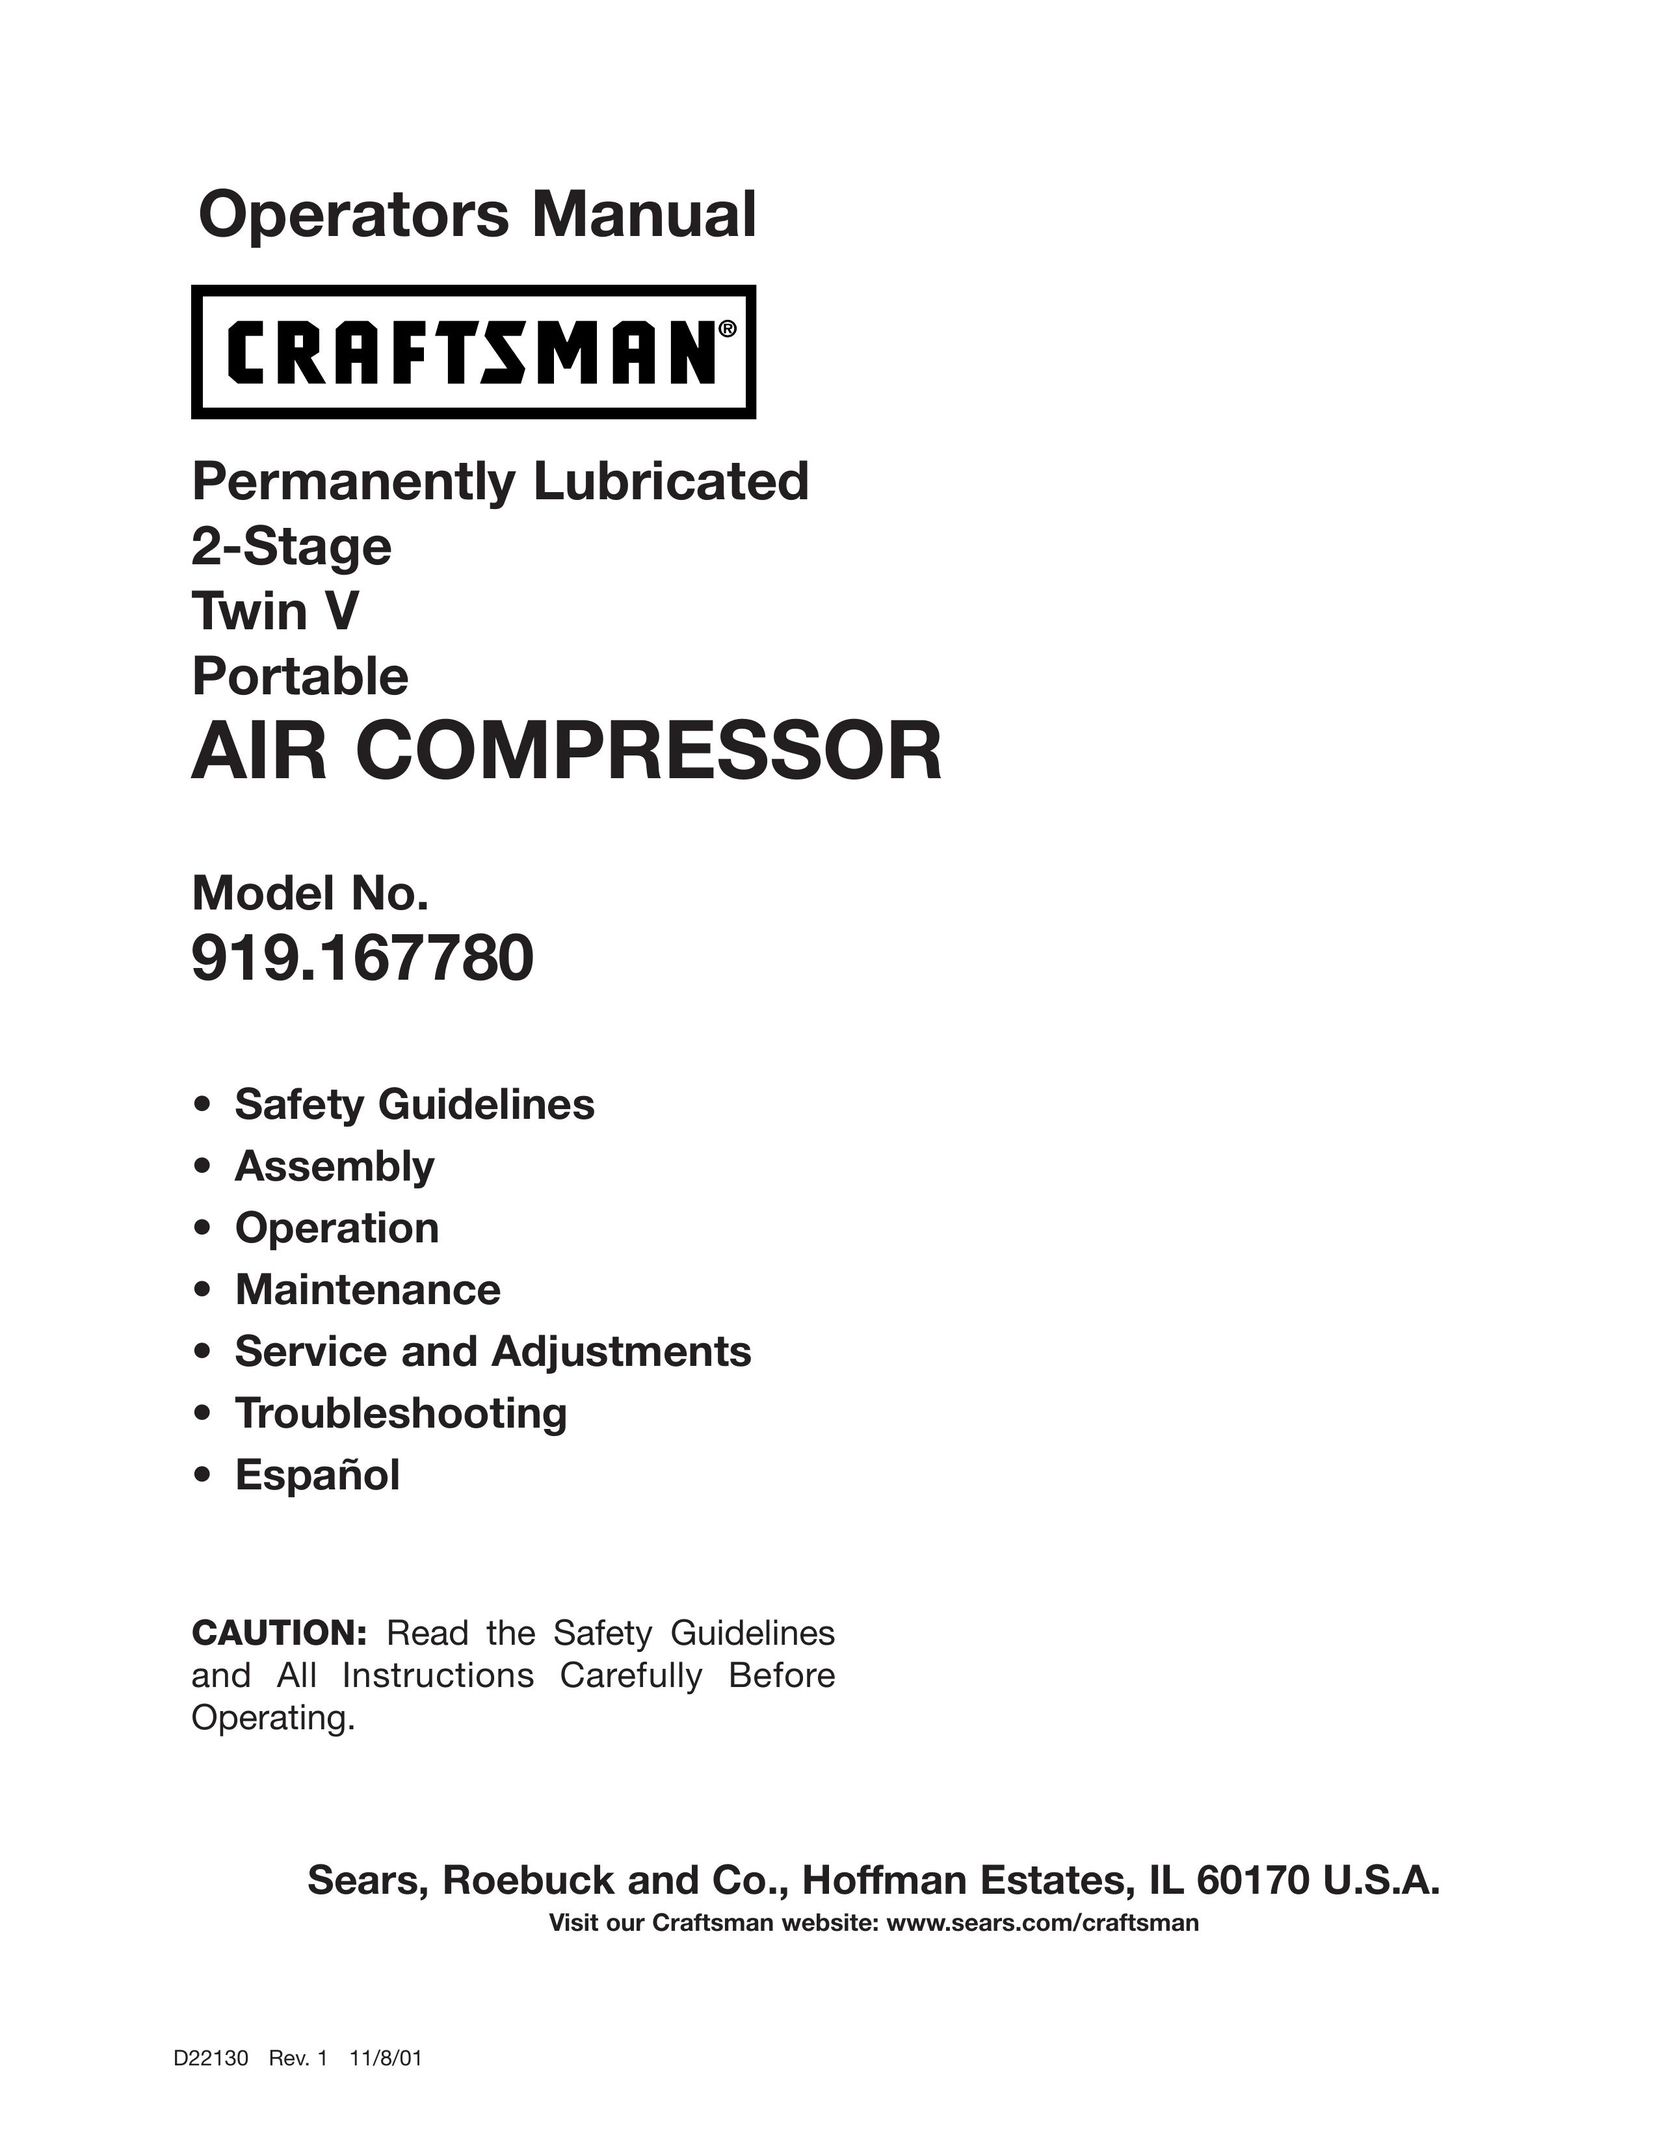 Craftsman 919.16778 Air Compressor User Manual